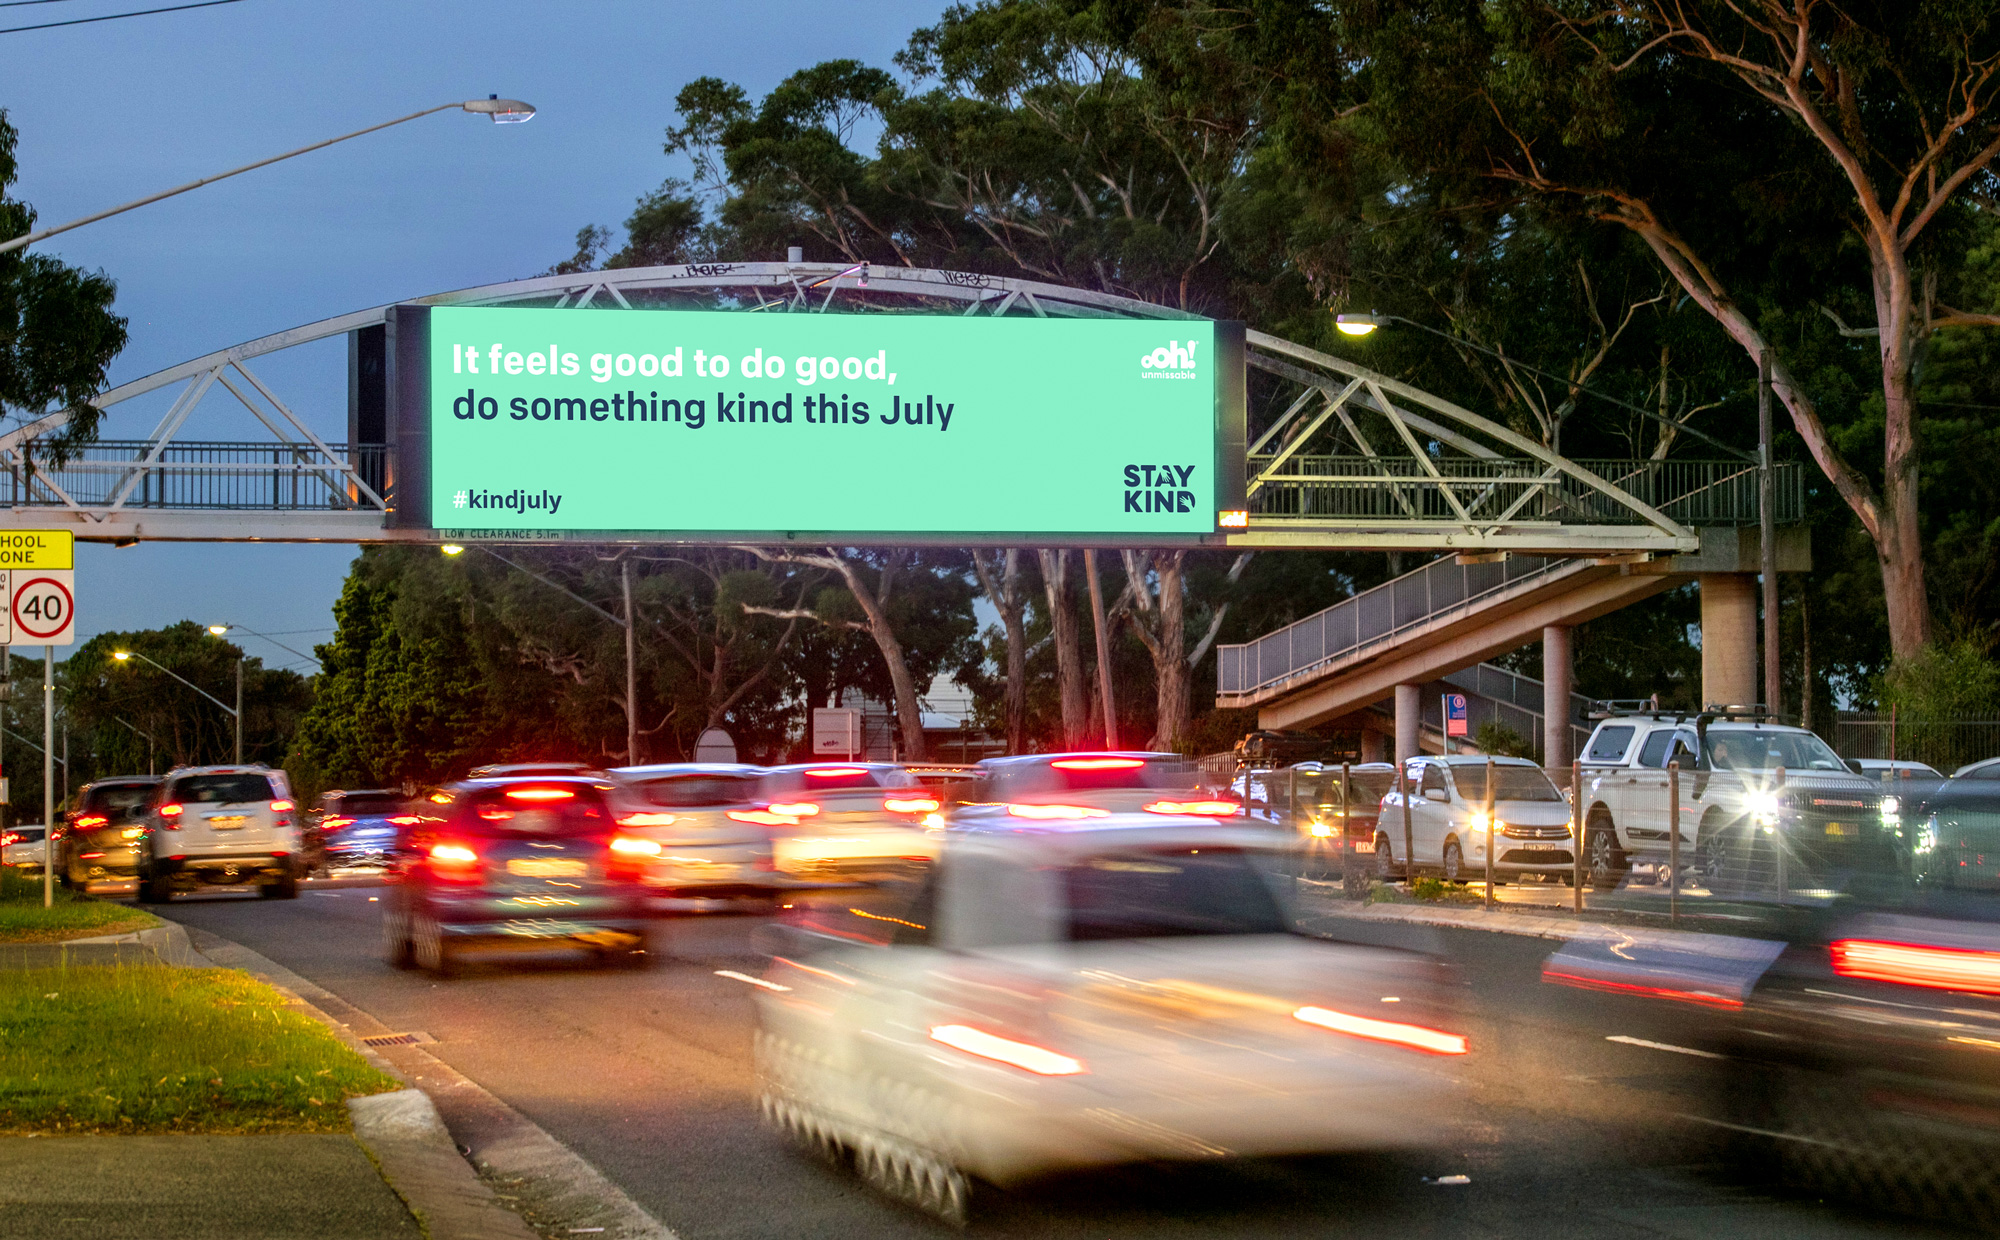 Stay Kind billboard advertising on road